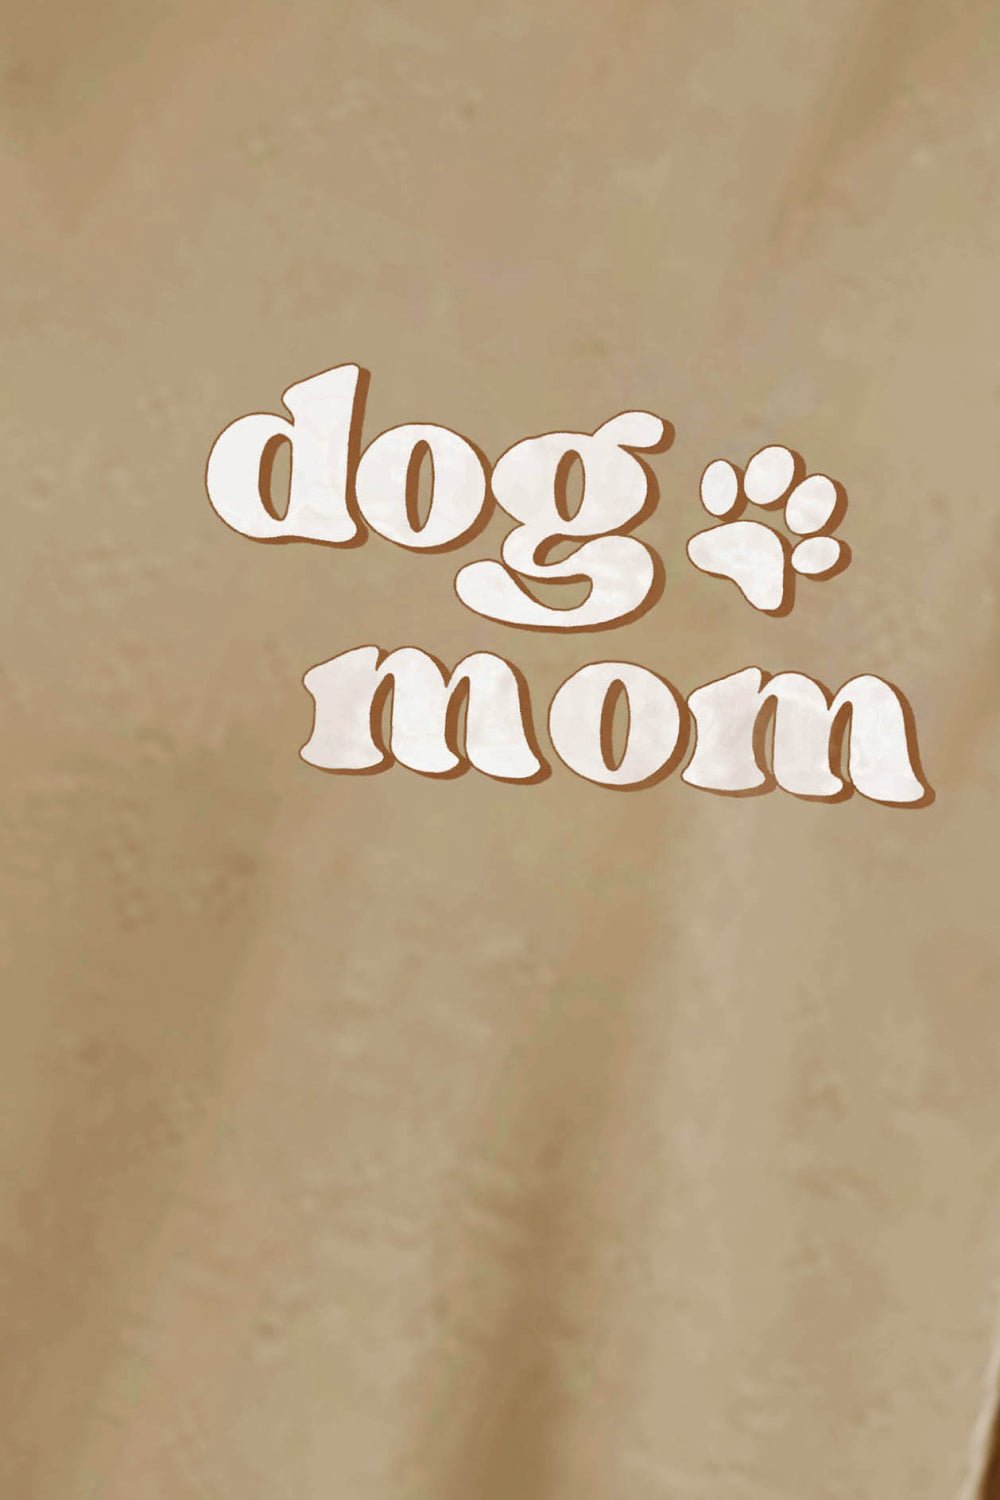 Dog Mom Graphic Sweatshirt